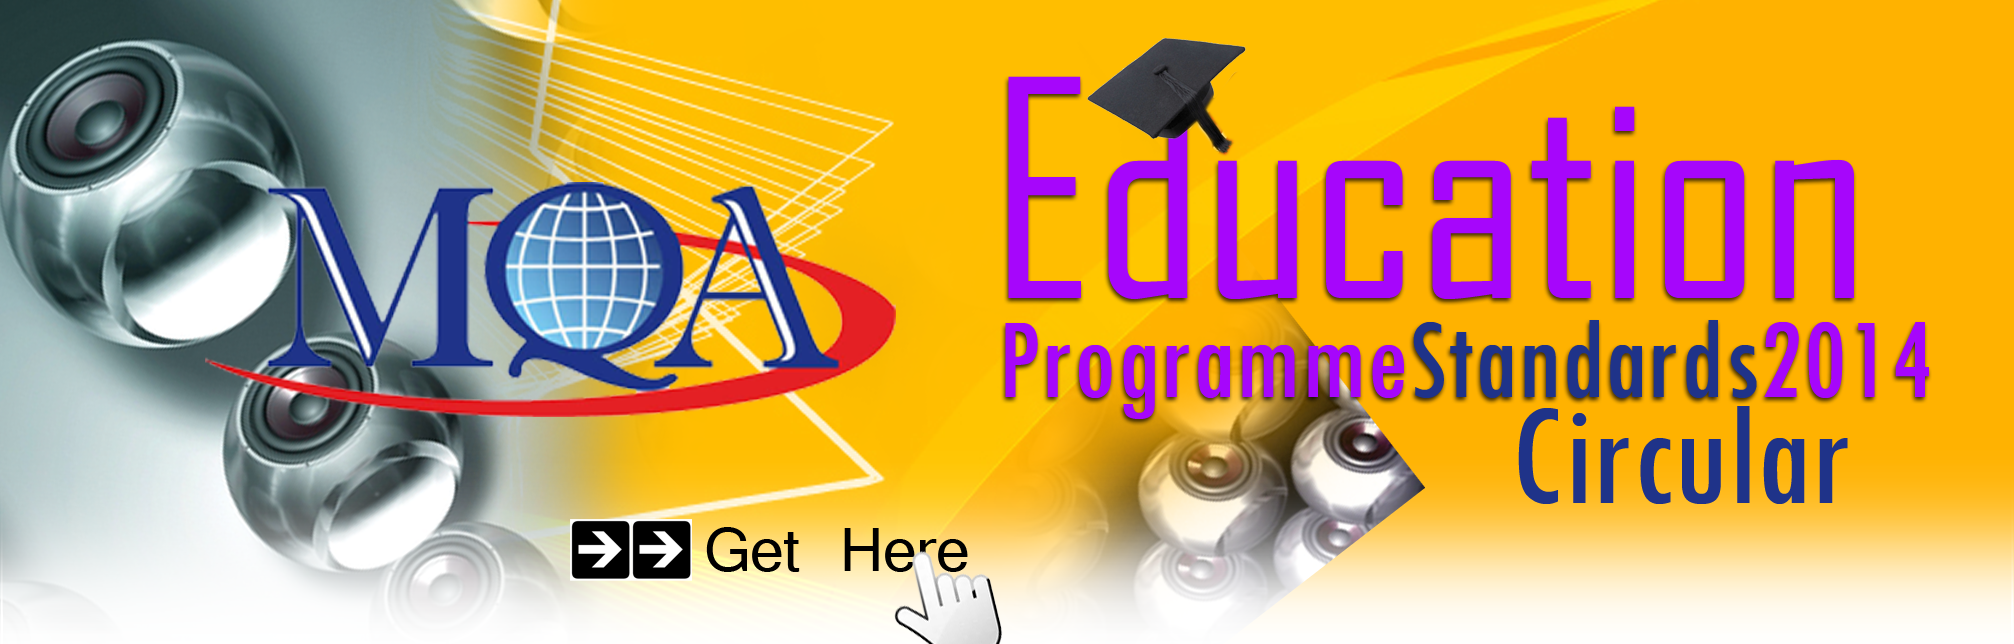 MQA Circular: Education Programme Standards – MQA 2014